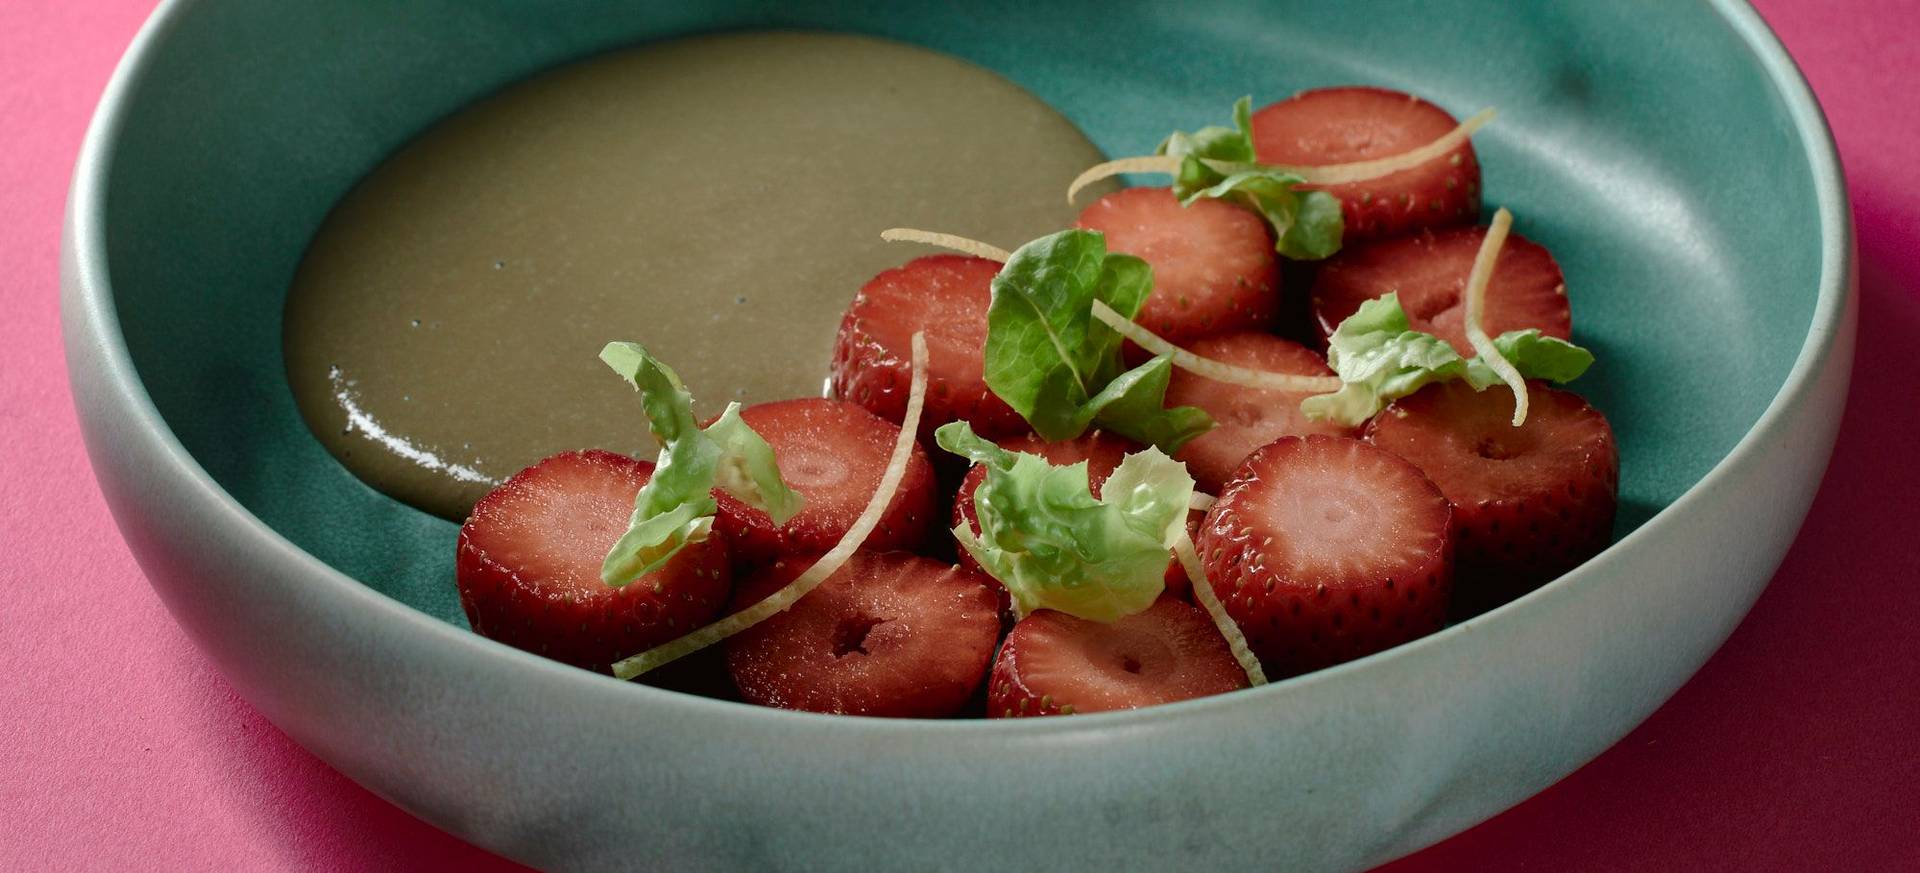 Veganes Erdbeerdessert mit Kopfsalat & Sonnenblumenkernen